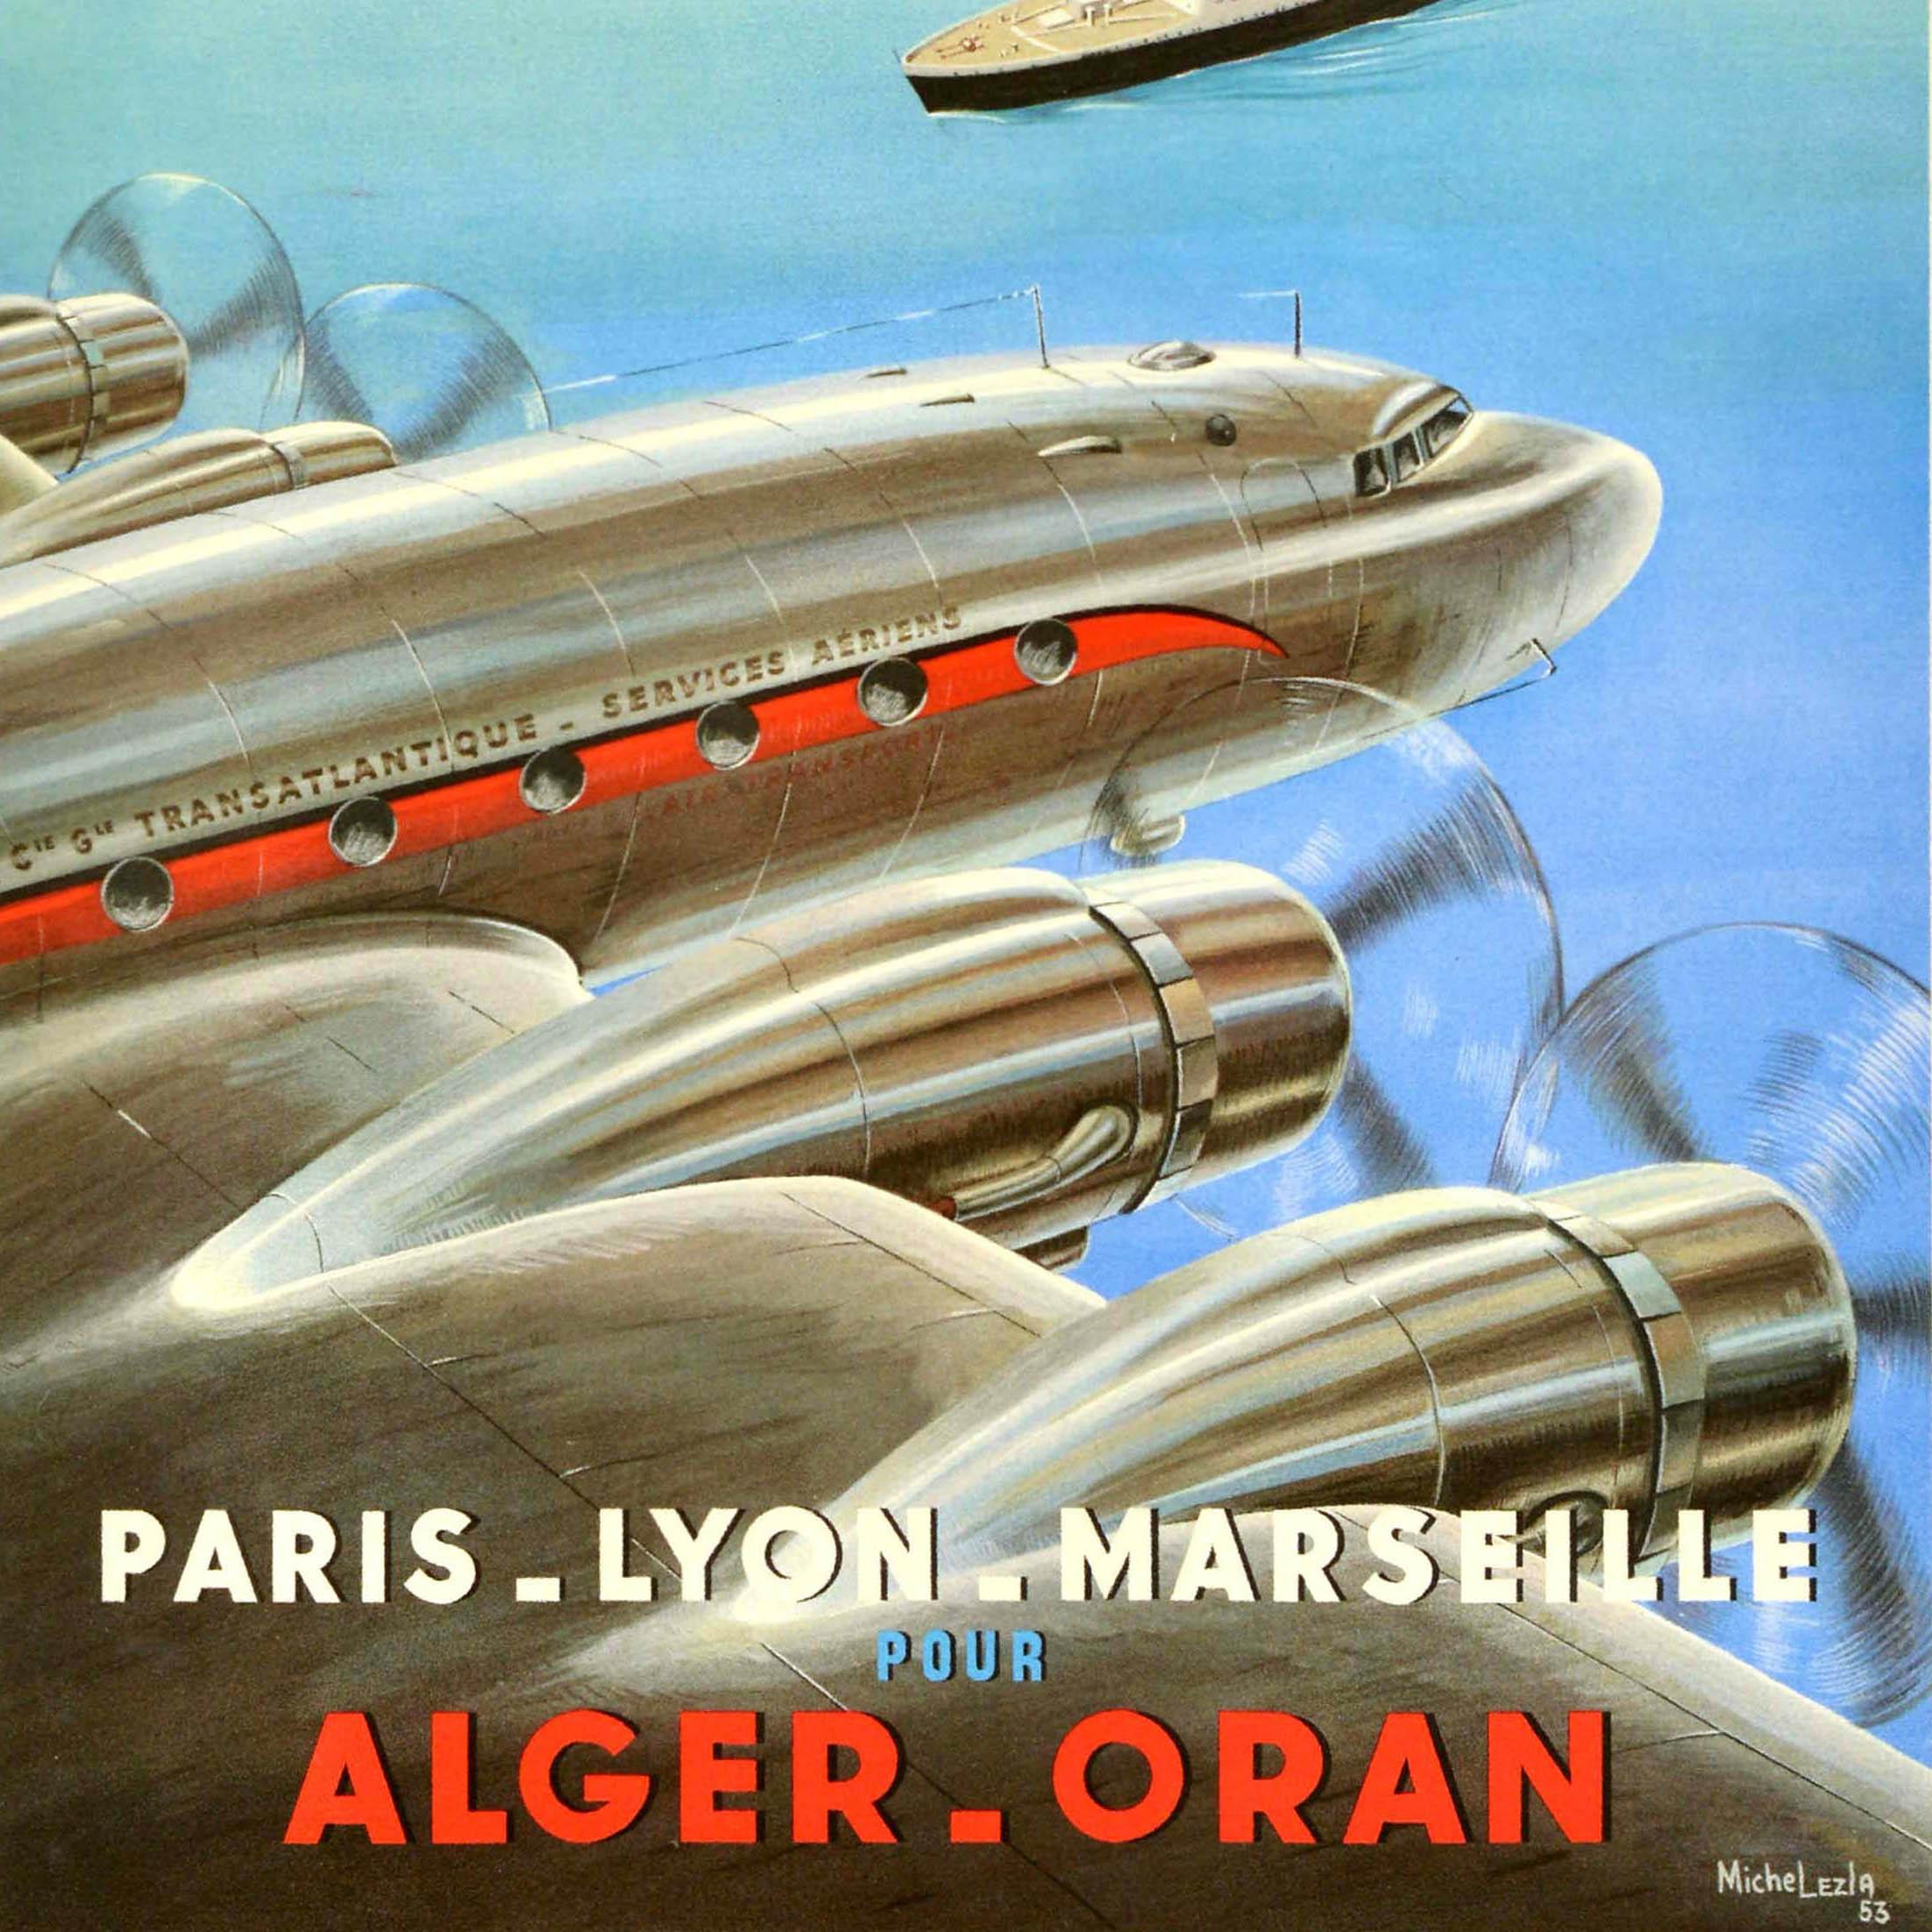 Original Vintage Travel Poster Alger Oran Air Algerian Airways Douglas DC-4 - Gray Print by Michel Lezla